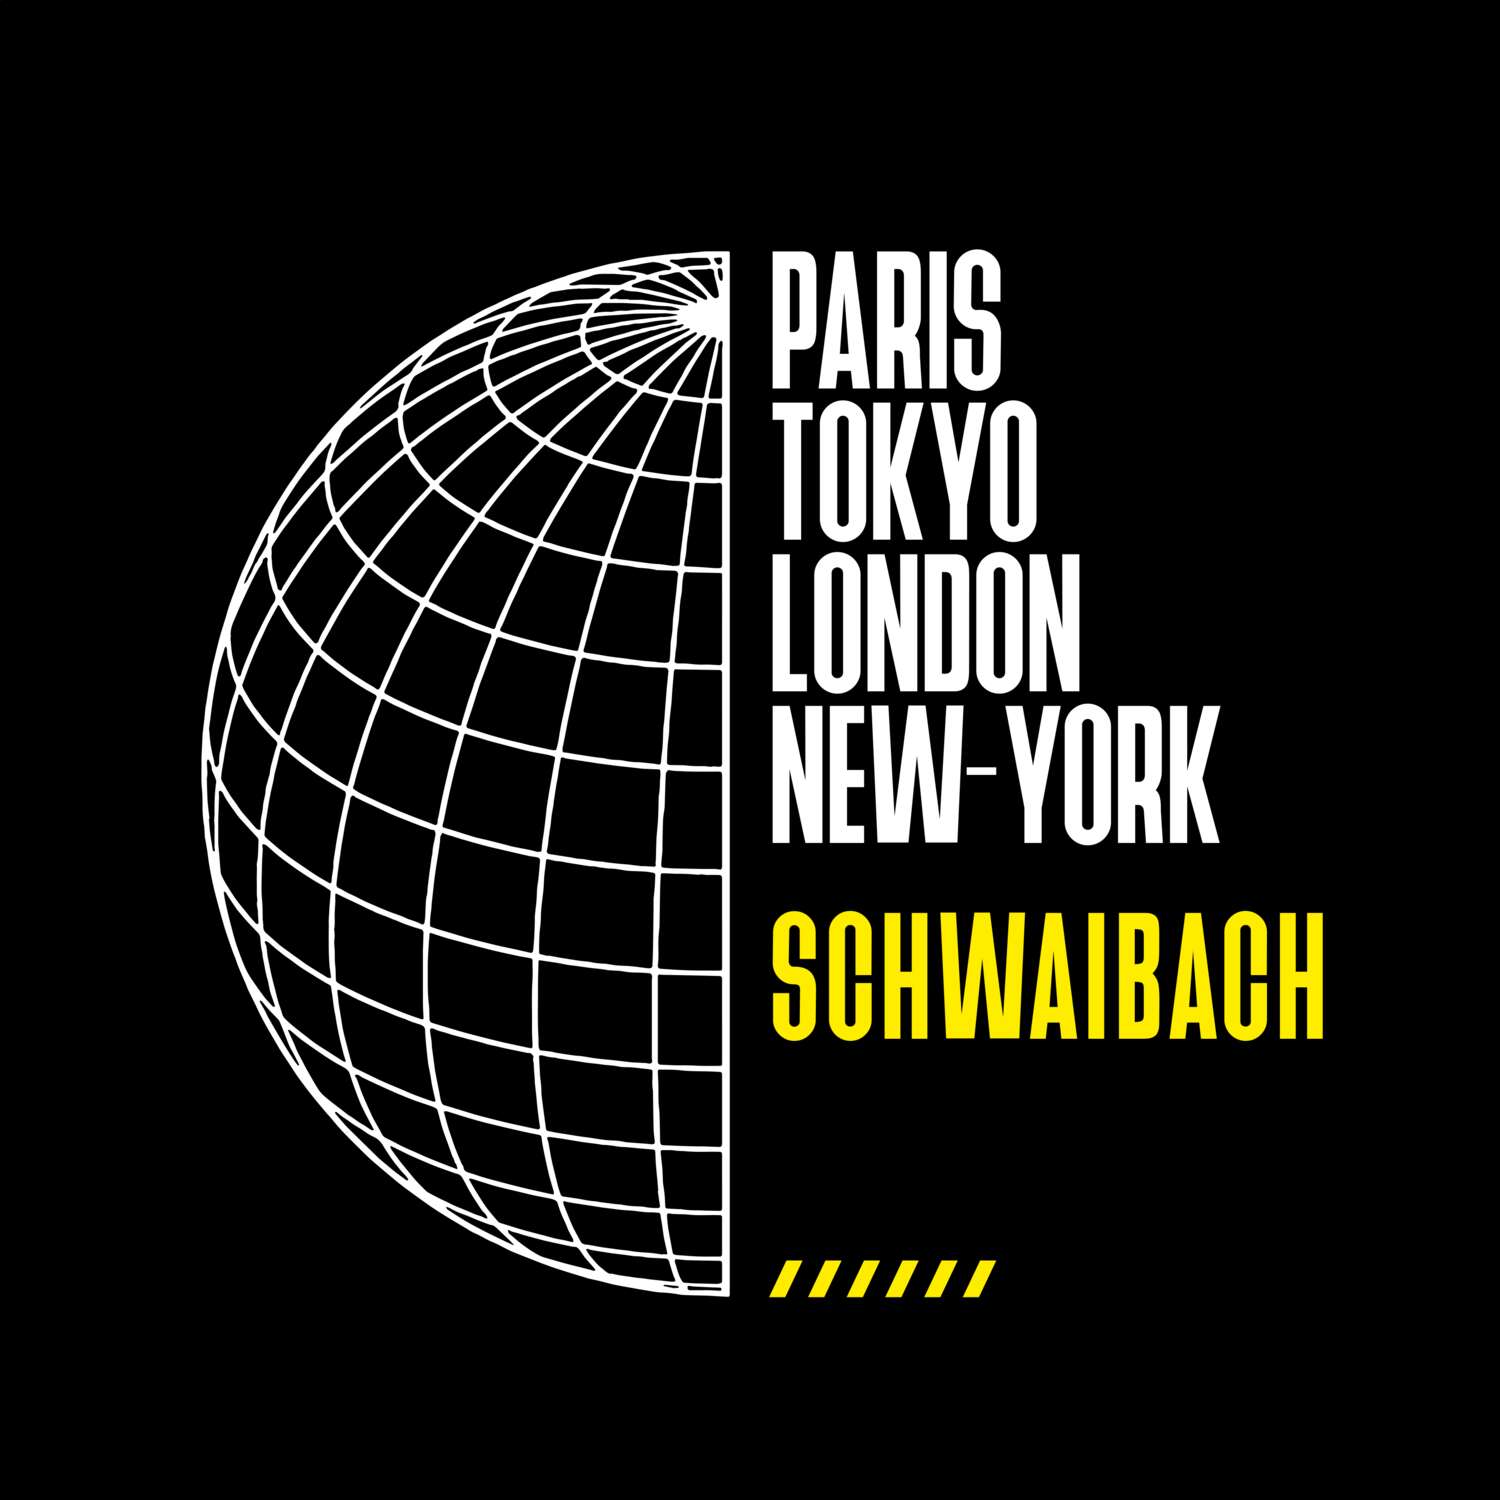 Schwaibach T-Shirt »Paris Tokyo London«